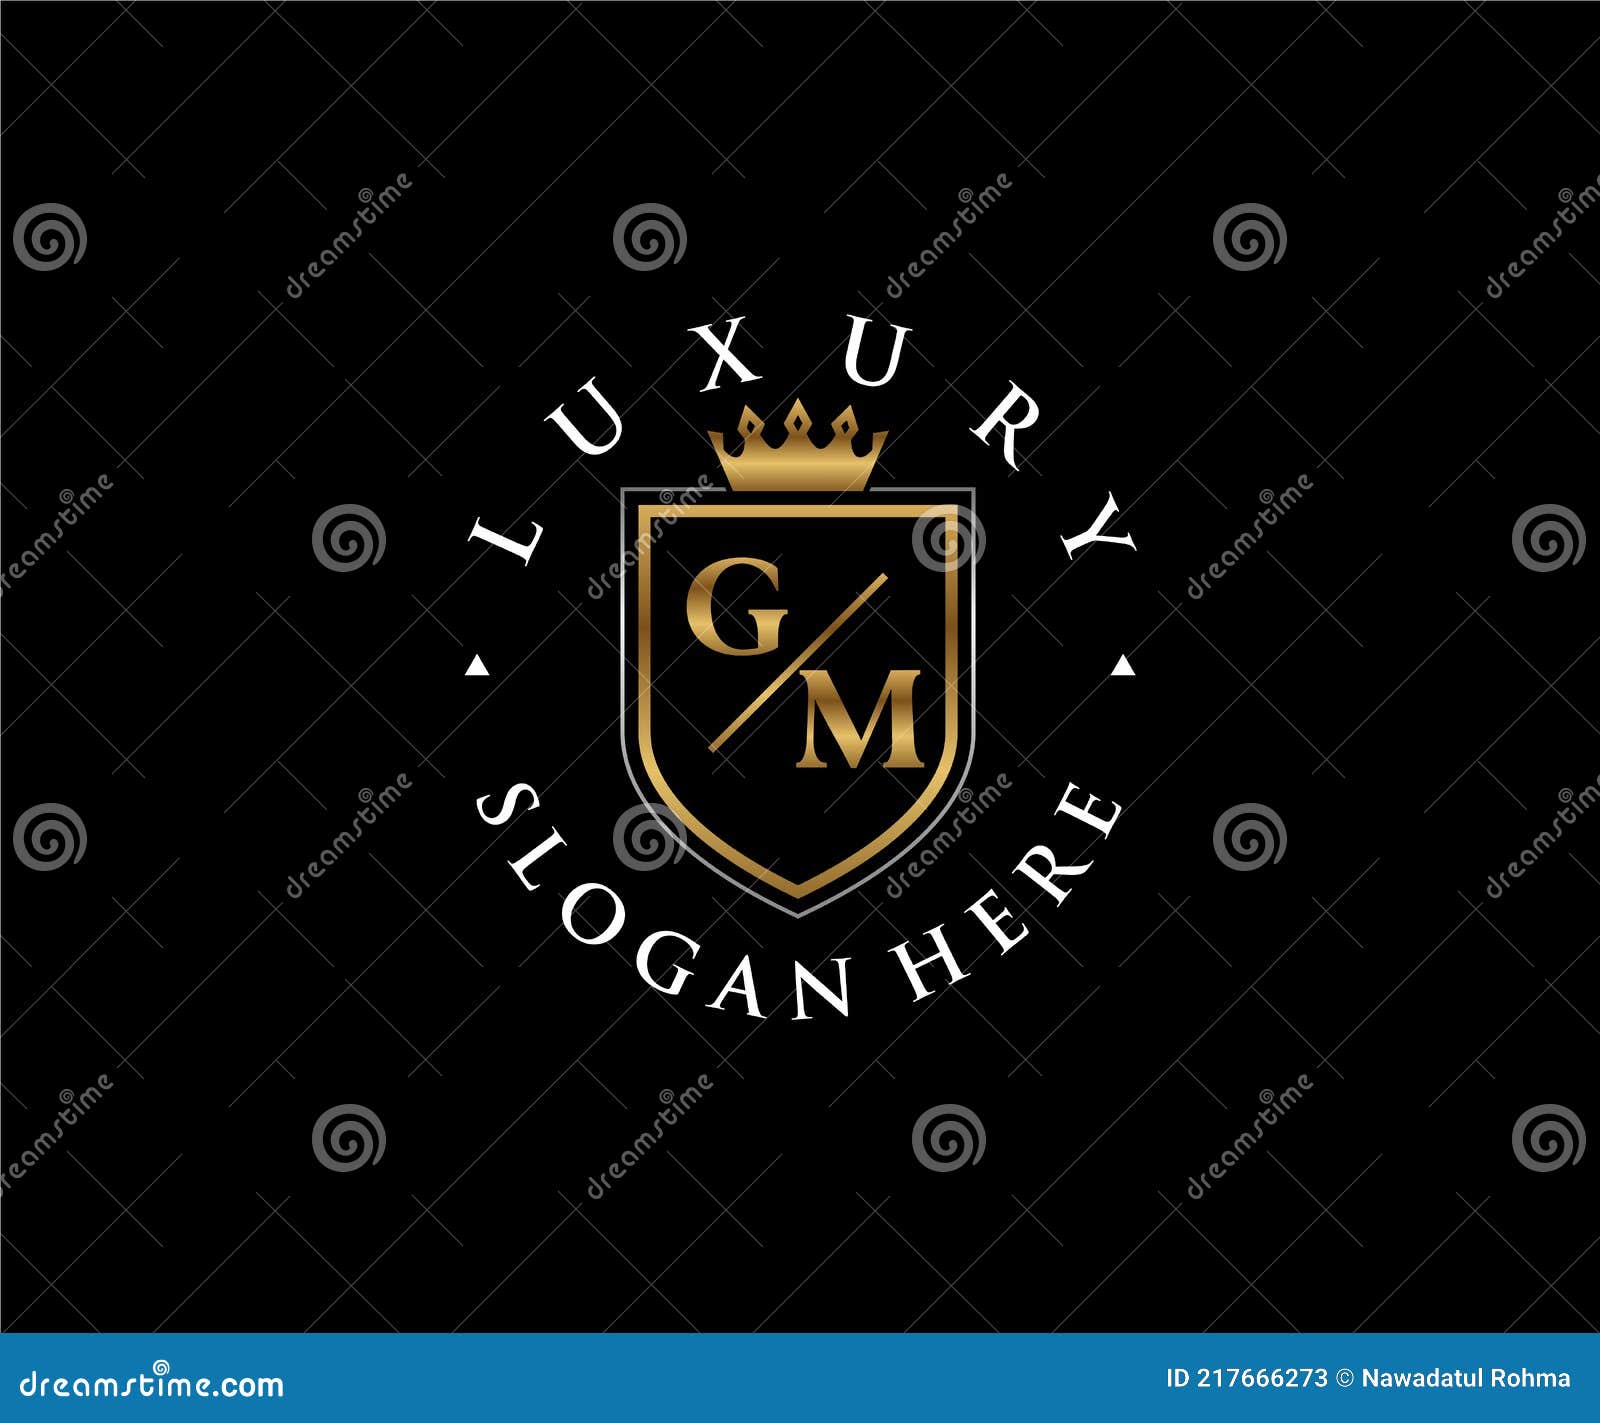 Luxury royal wing letter gm crest gold color logo Vector Image